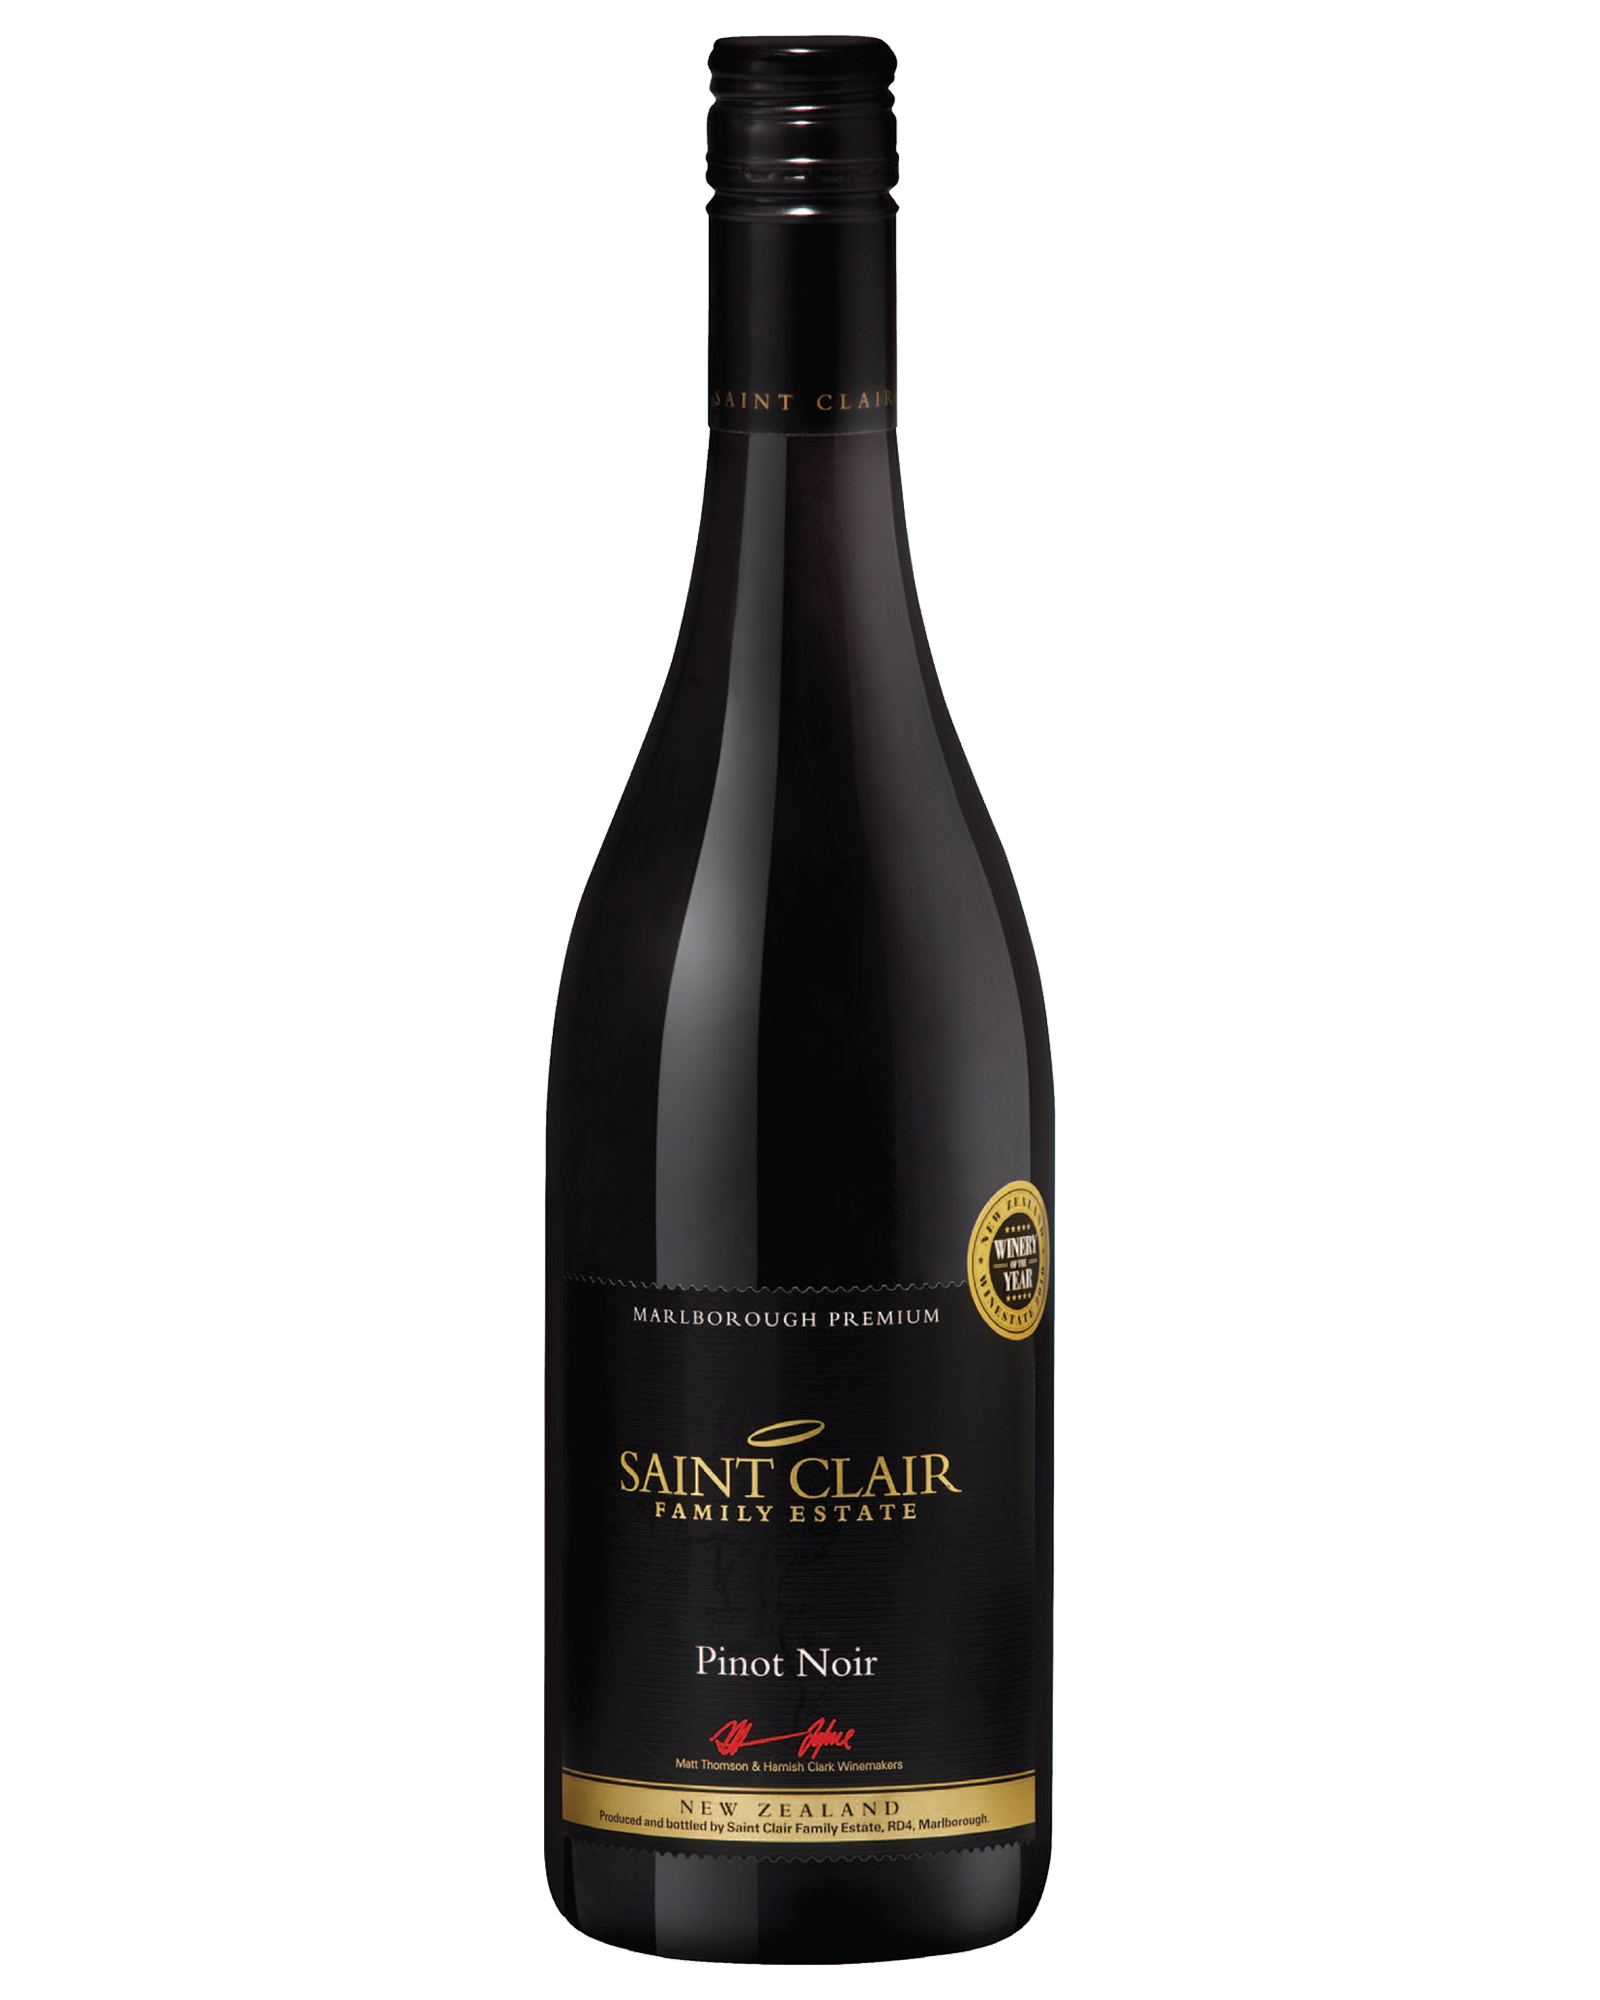 Saint Clair Pinot Noir